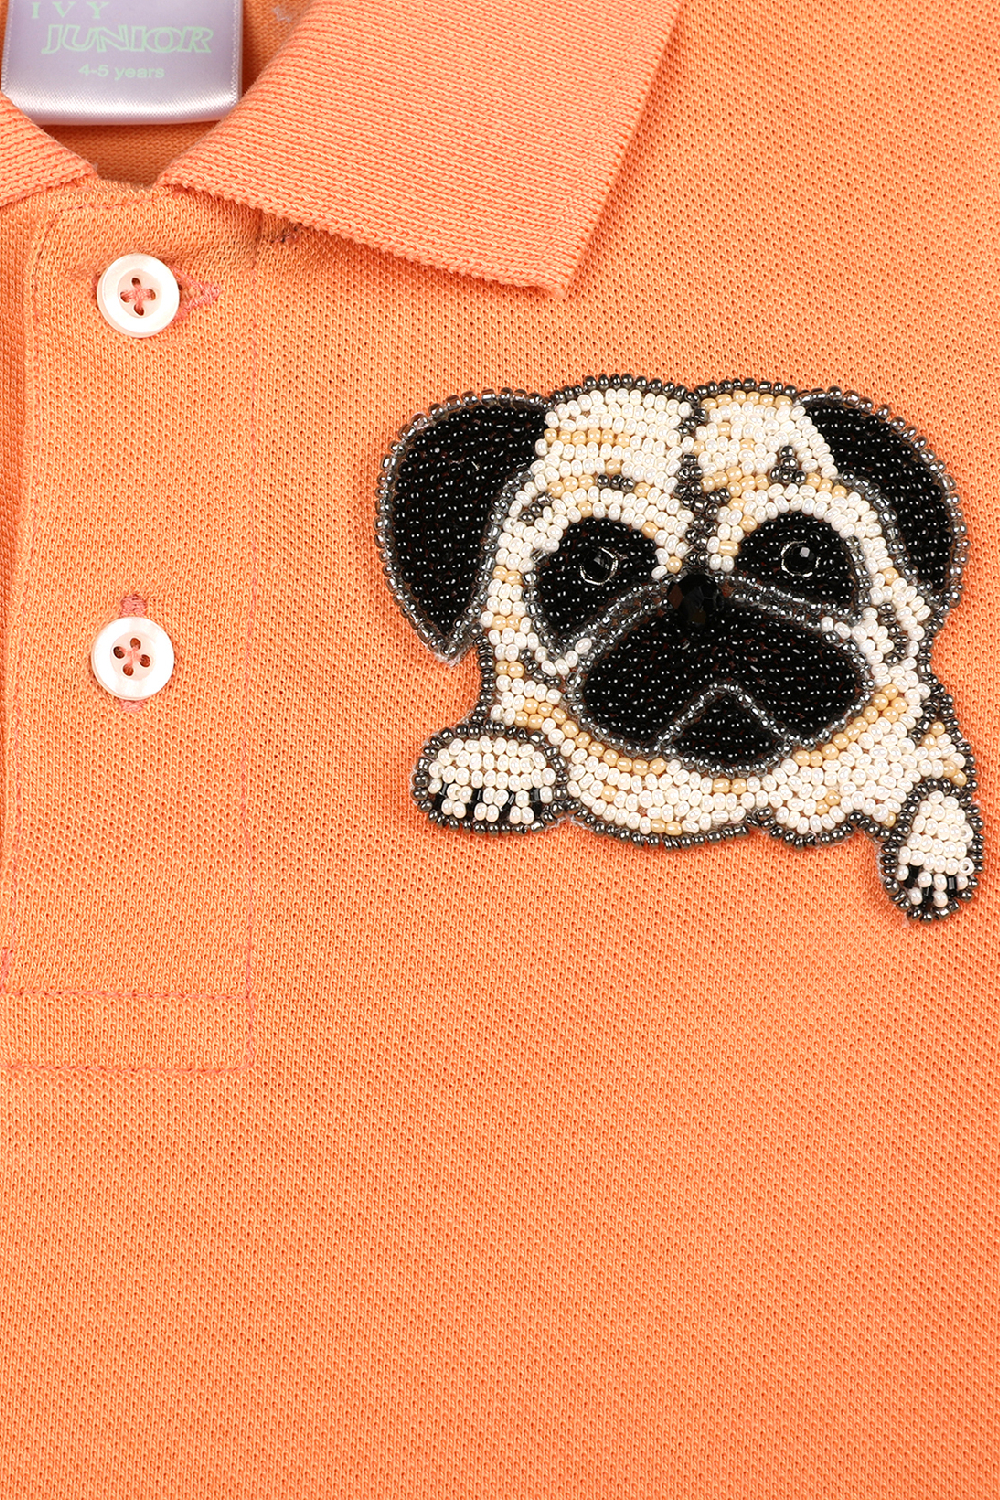 Peach Polo T-Shirt With Pug Face Motif